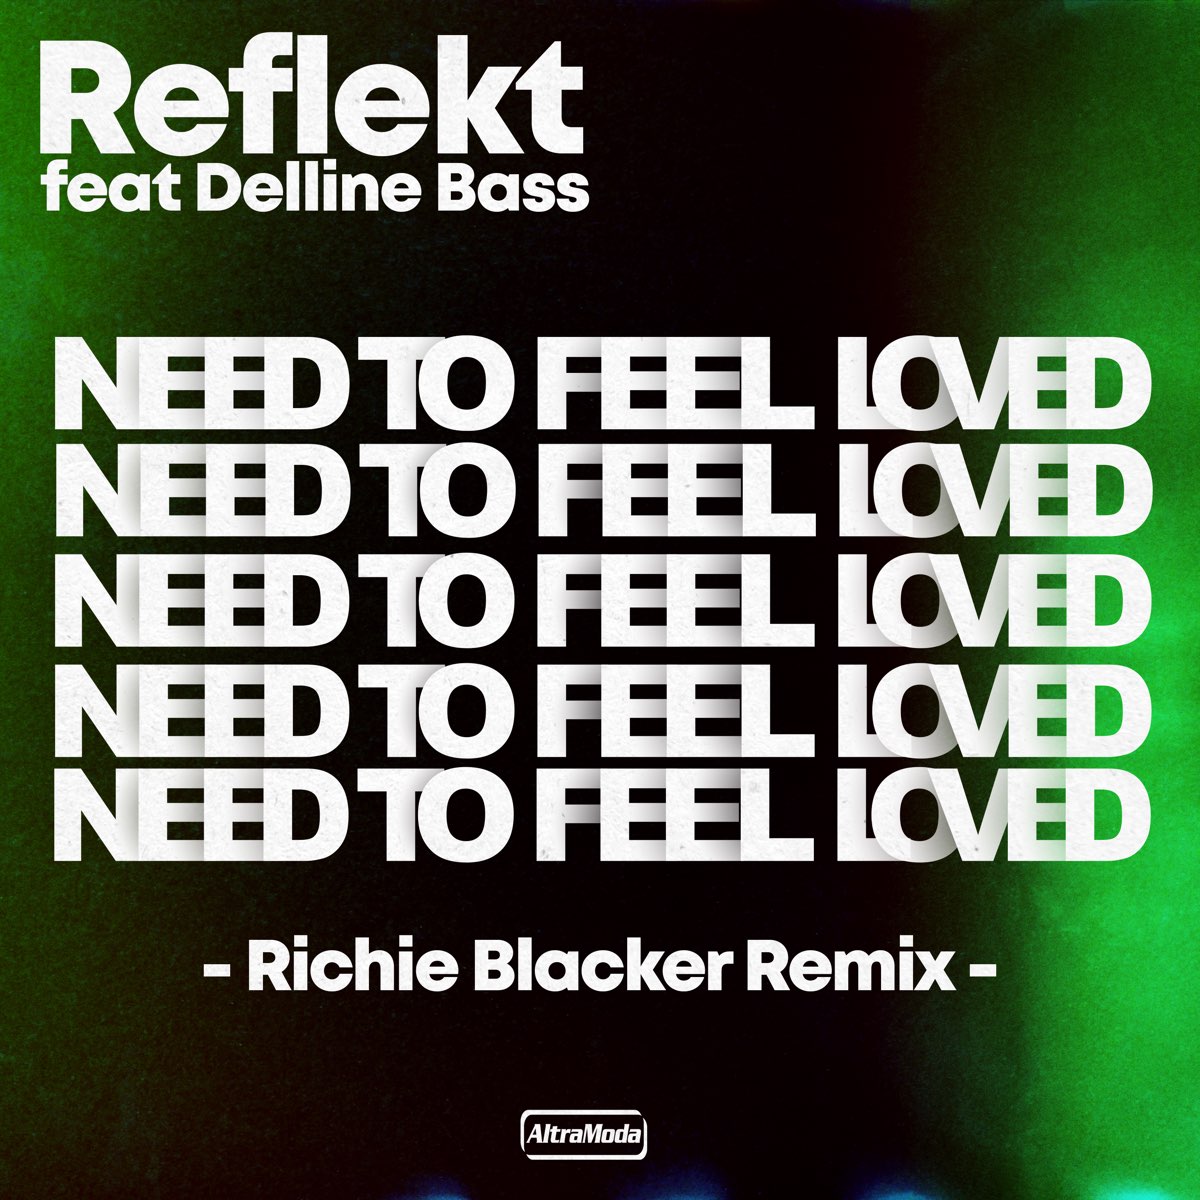 Reflekt ft. Delline Bass need to feel Loved. Reflekt feat. Delline Bass. Reflekt need to feel Loved. Reflekt feat. Delline Bass - need to feel Loved (Adam k & Soha Vocal Remix). Reflekt delline bass need to feel loved